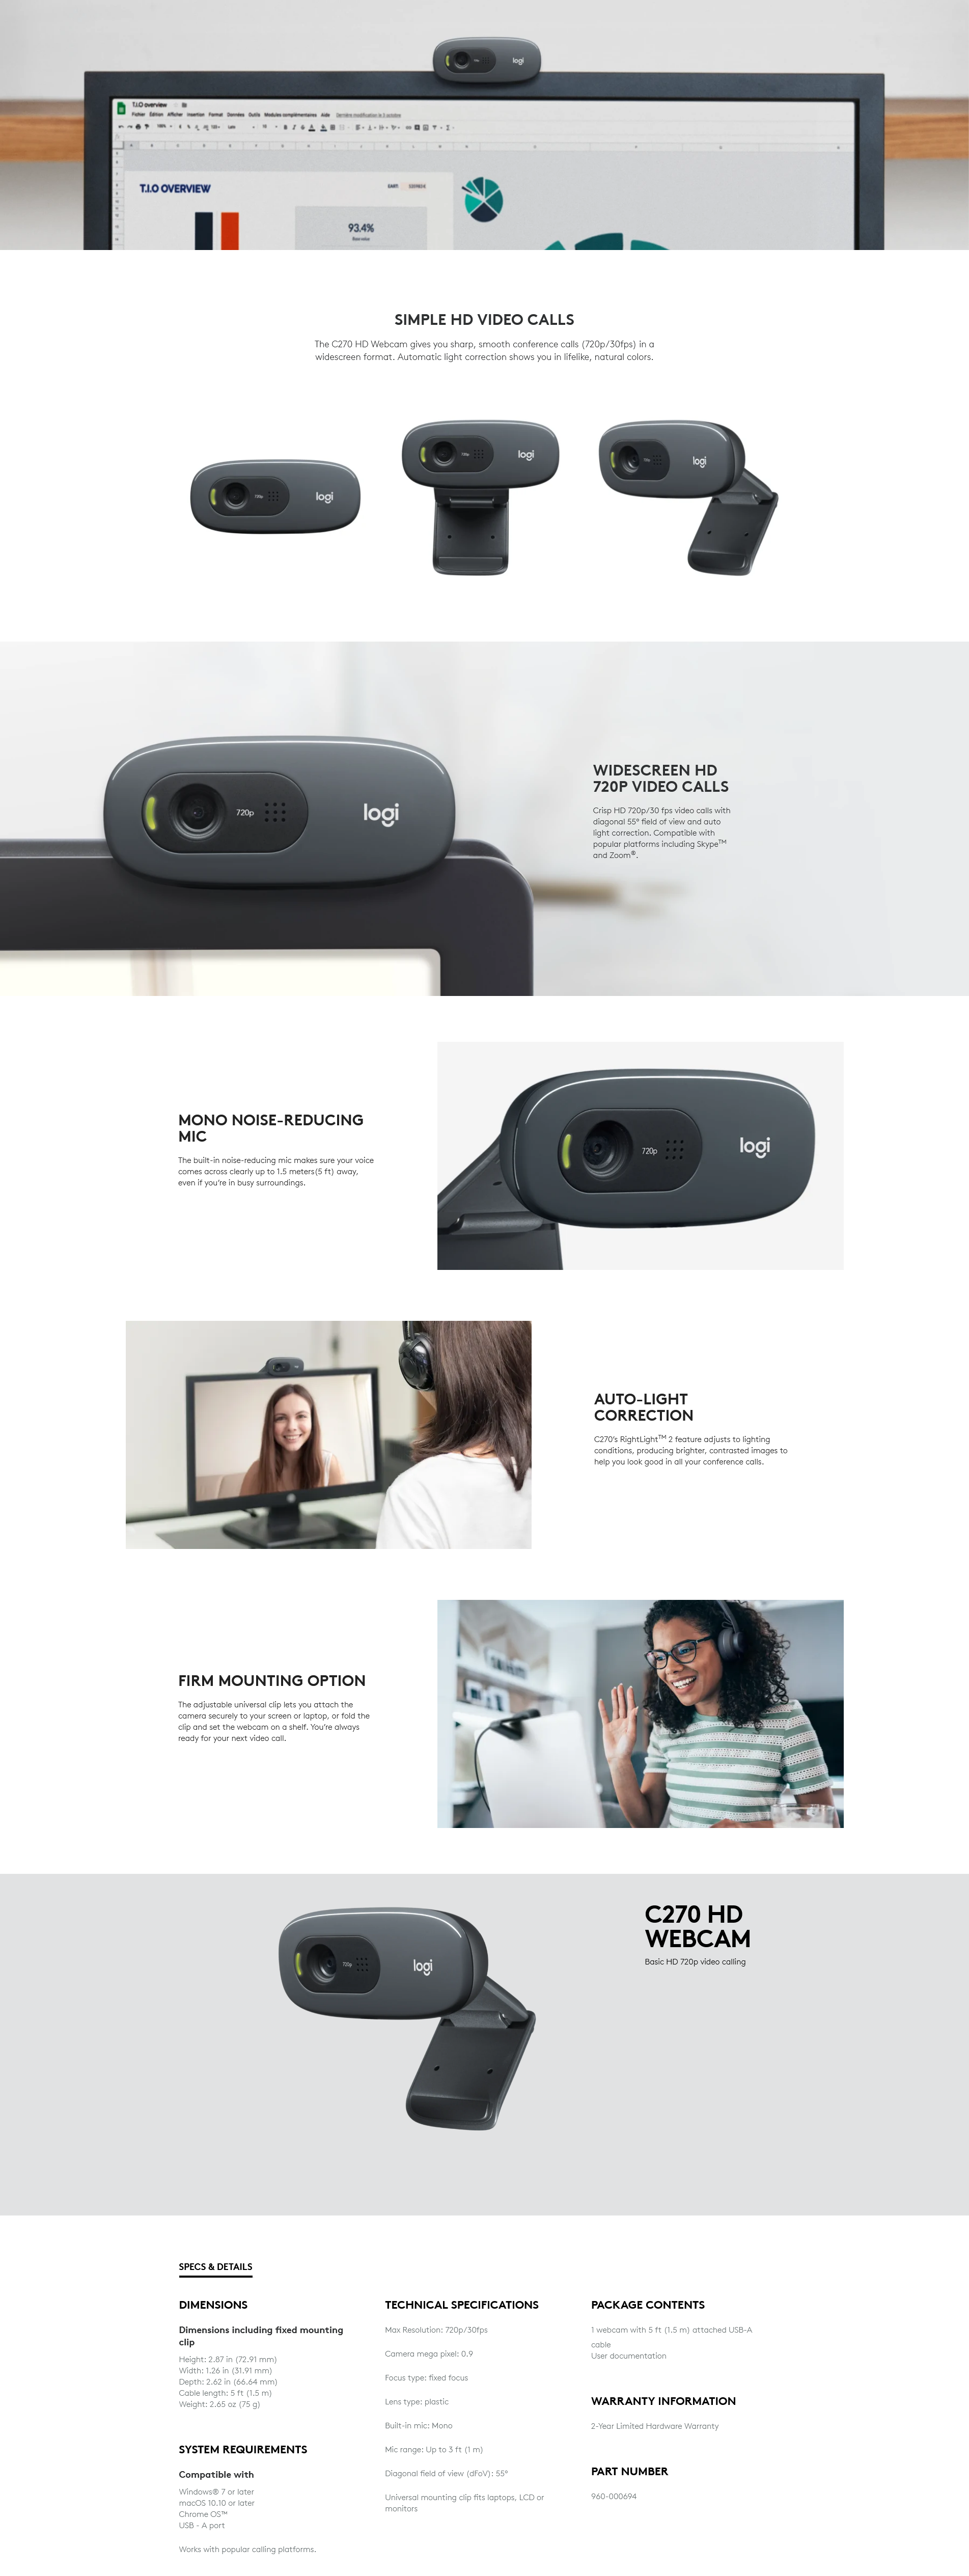 hverdagskost revolution Cataract Logitech C270 HD 720p/30fps Webcam with Long Range Microphone - 960-000694